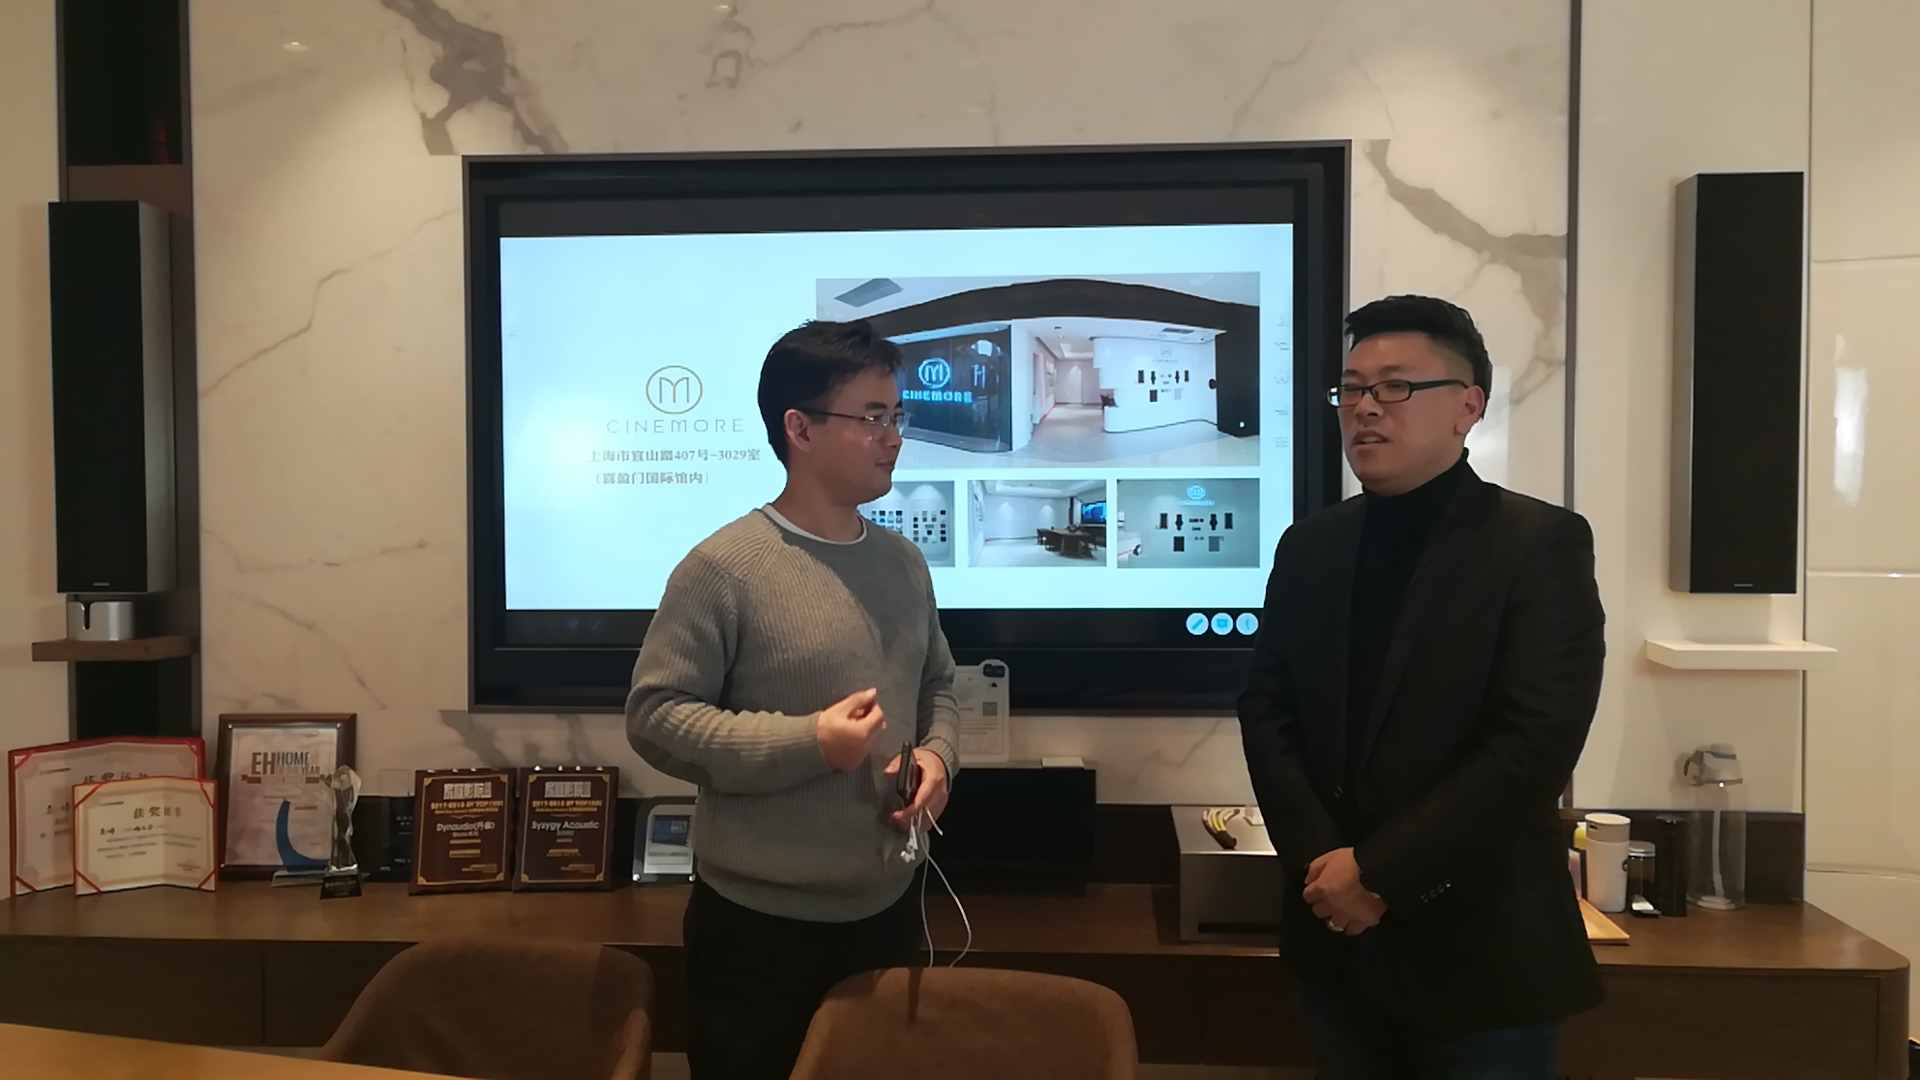 CINE&MORE设计师杨从文分享国际获奖案例，于喜盈门官抖开展“设计奇葩说”直播活动